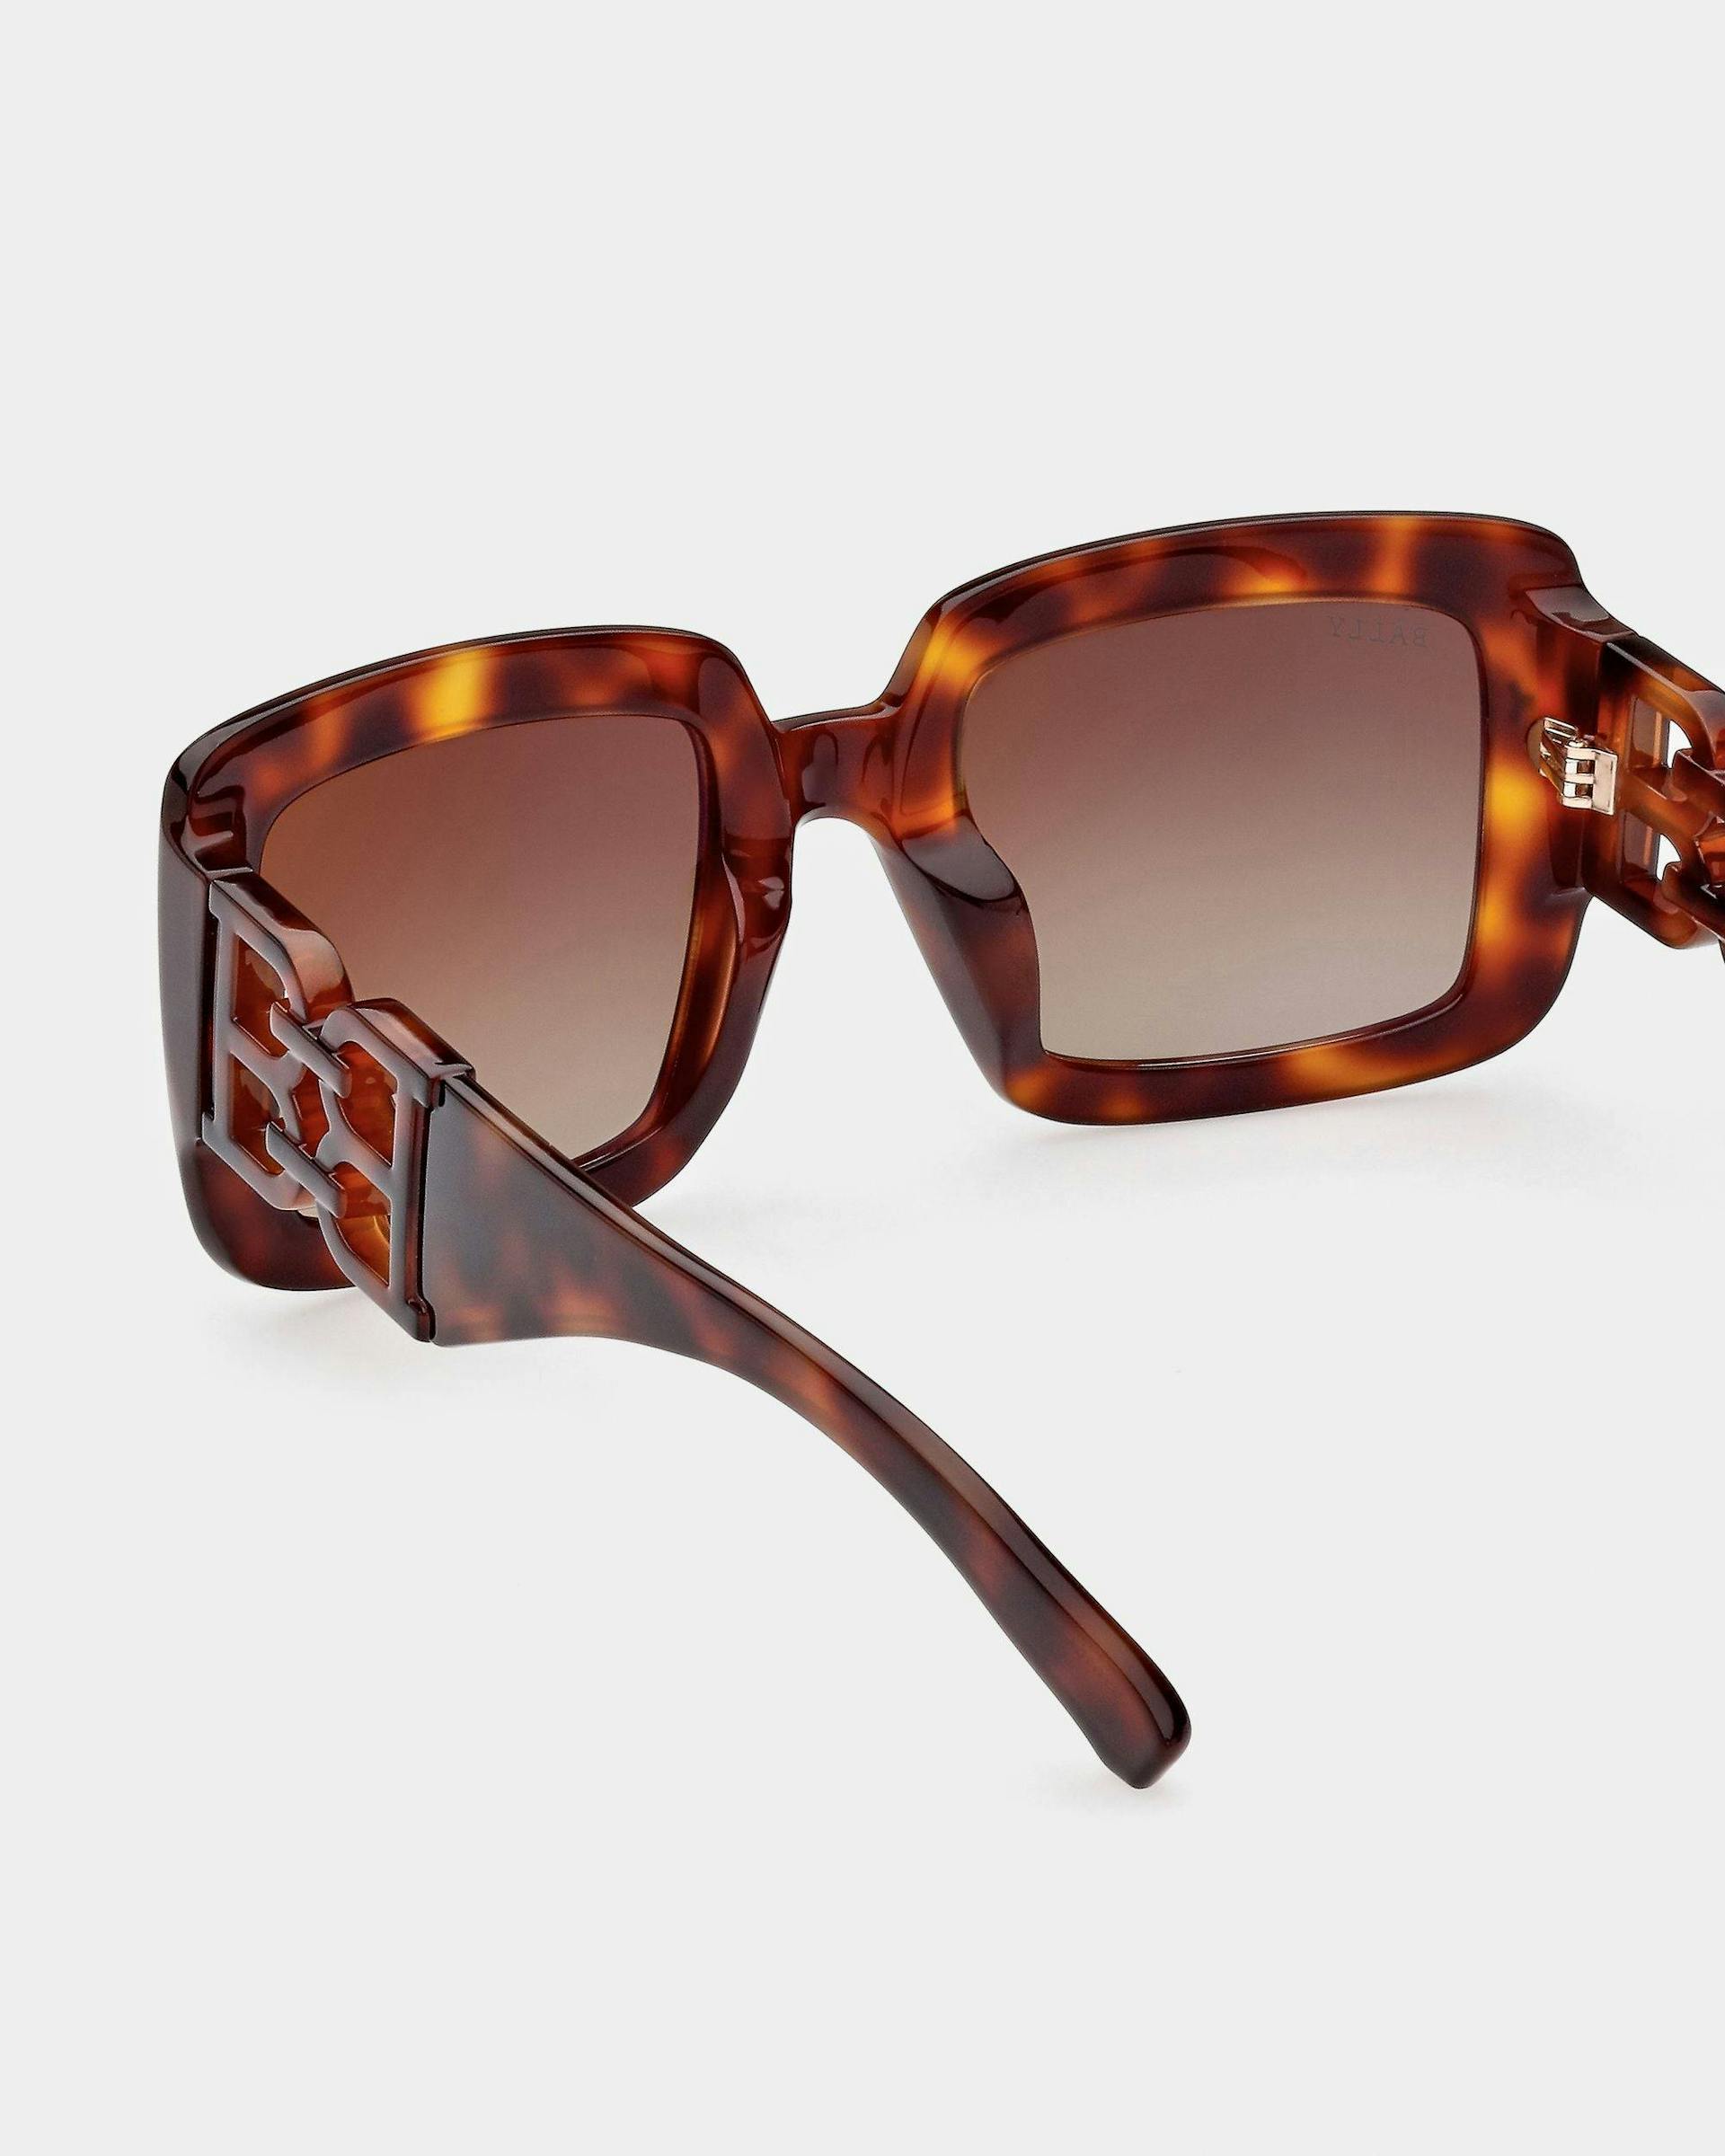 Filiana Sunglasses in Havana Brown & Gradient Brown Lenses Acetate Sunglasses In Havana Brown - Women's - Bally - 02